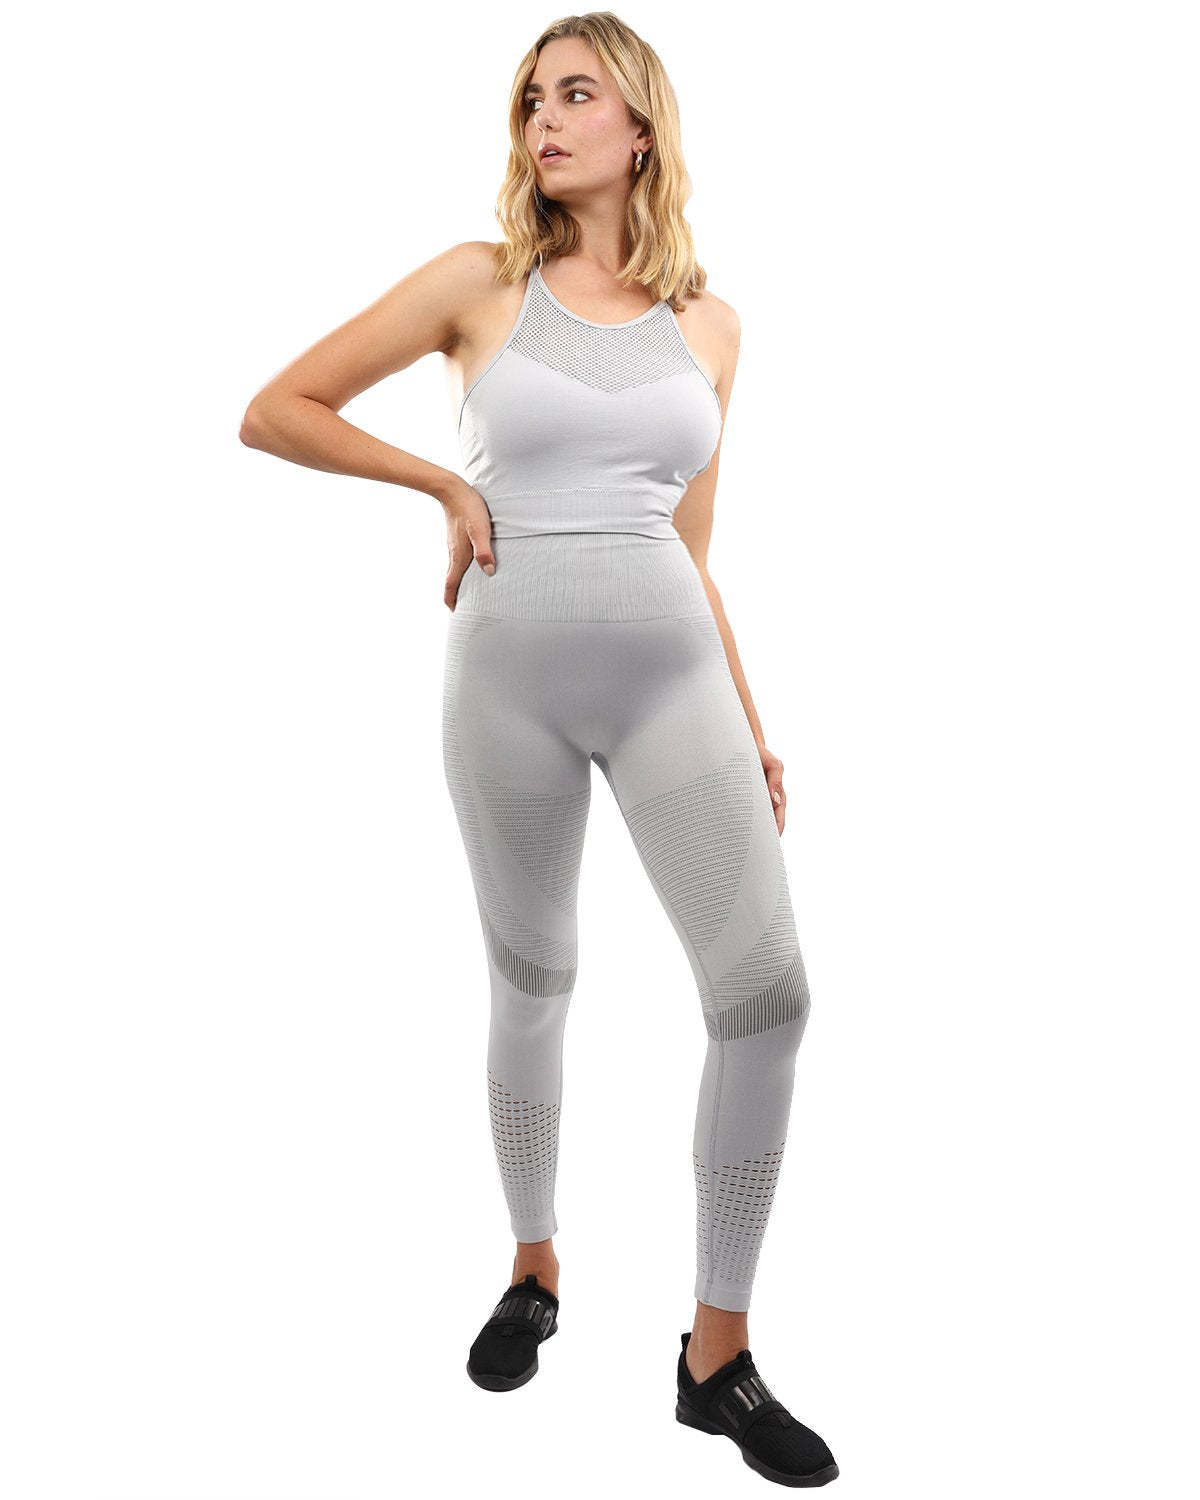 Primary image for Helia Seamless Leggings & Sports Bra Set - Grey